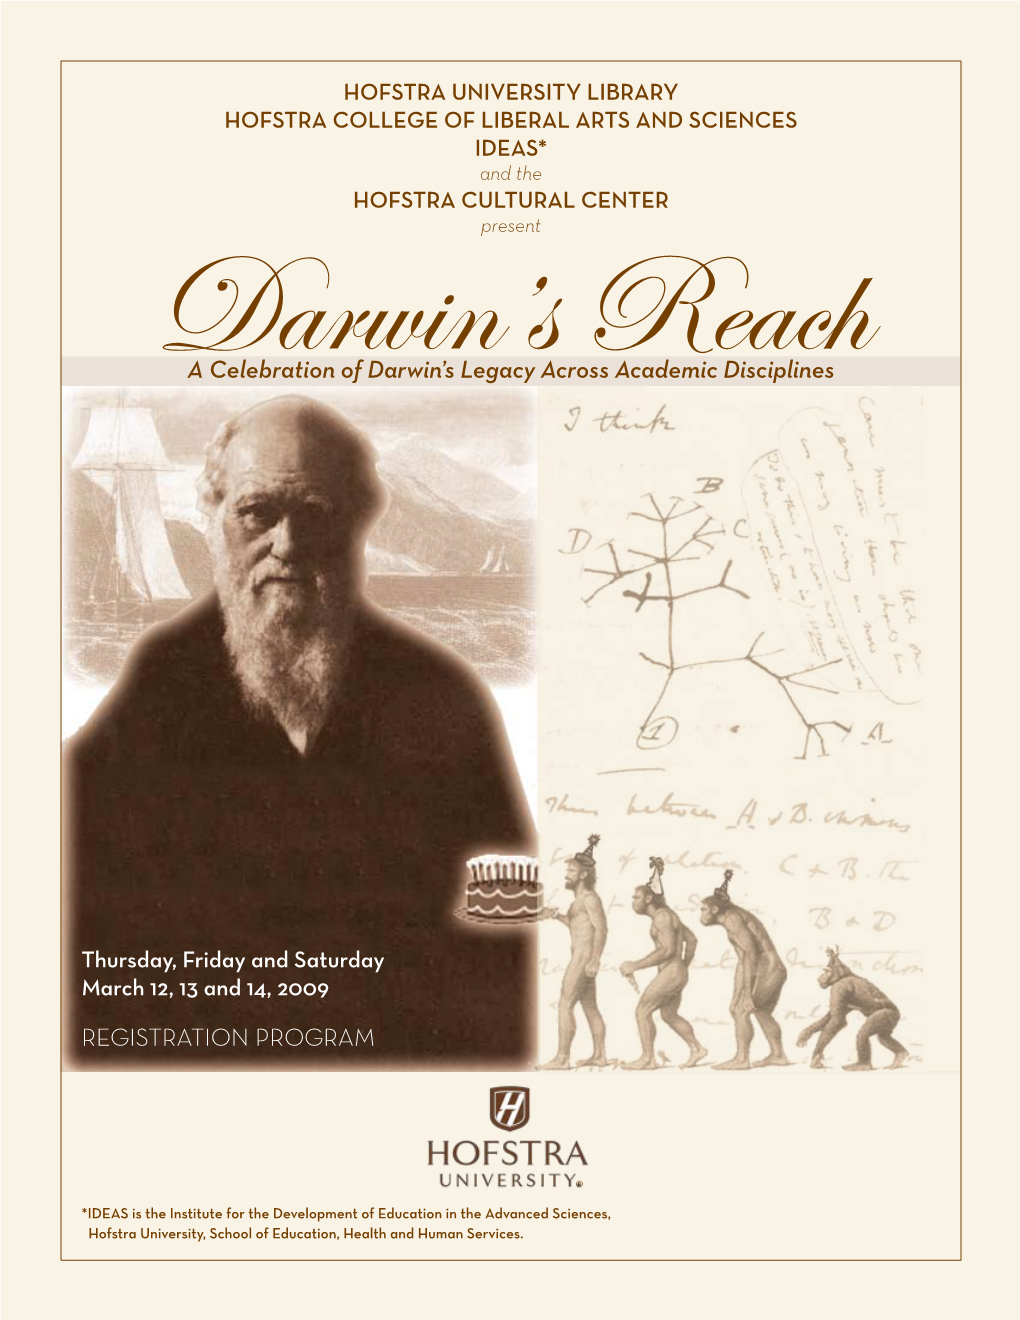 A Celebration of Darwin's Legacy Across Academic Disciplines